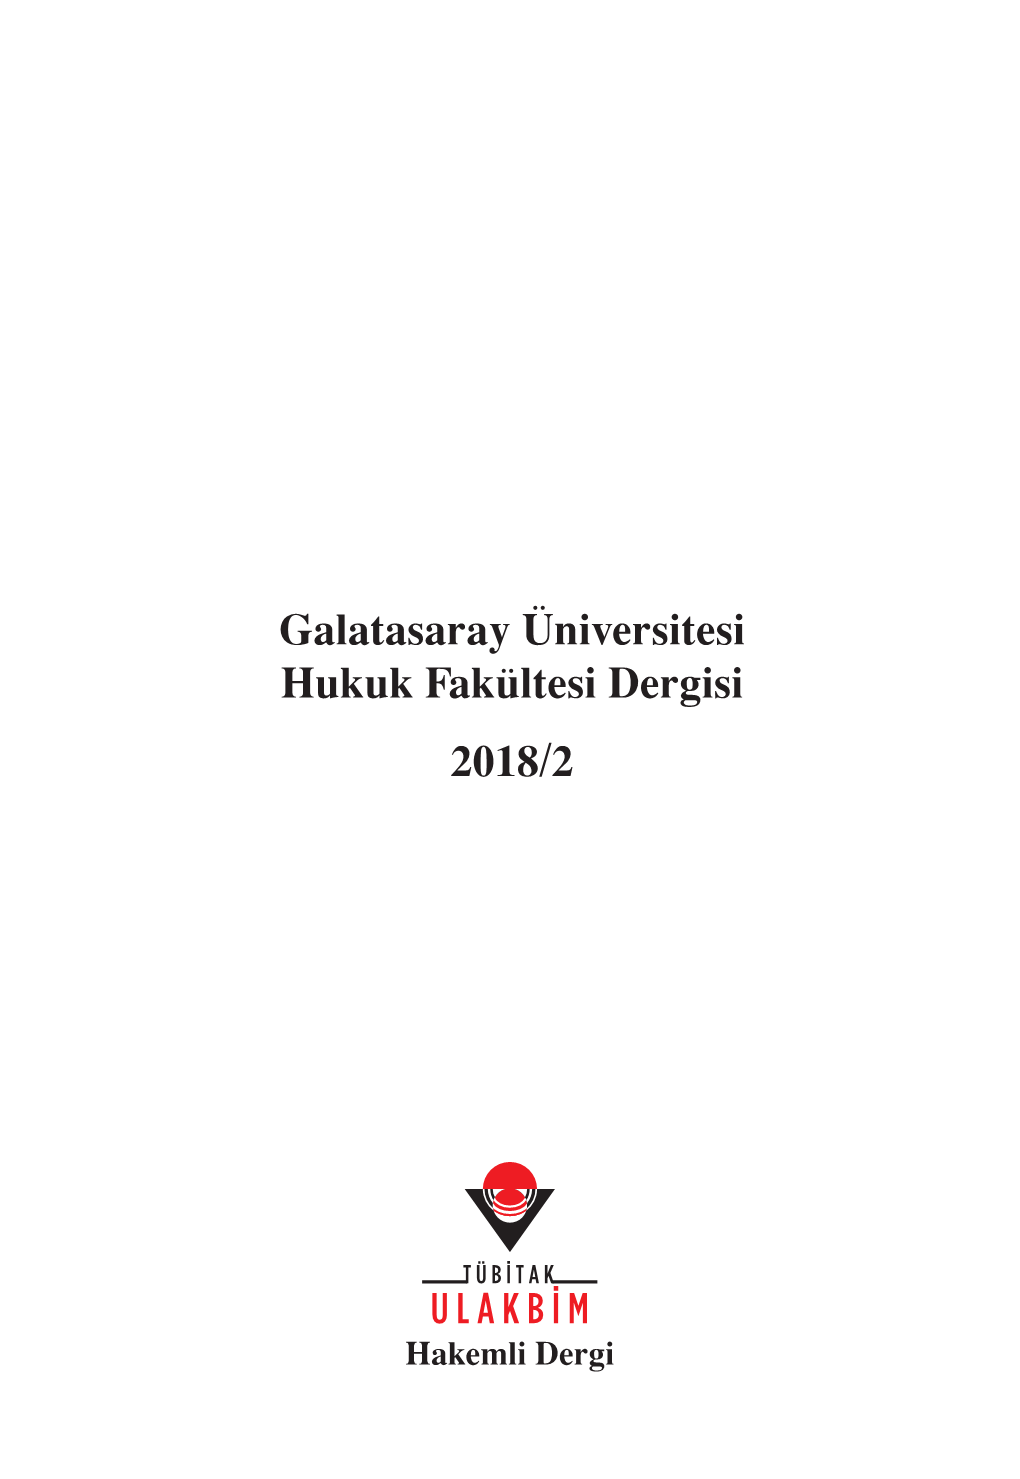 Galatasaray Üniversitesi Hukuk Fakültesi Dergisi 2018/2